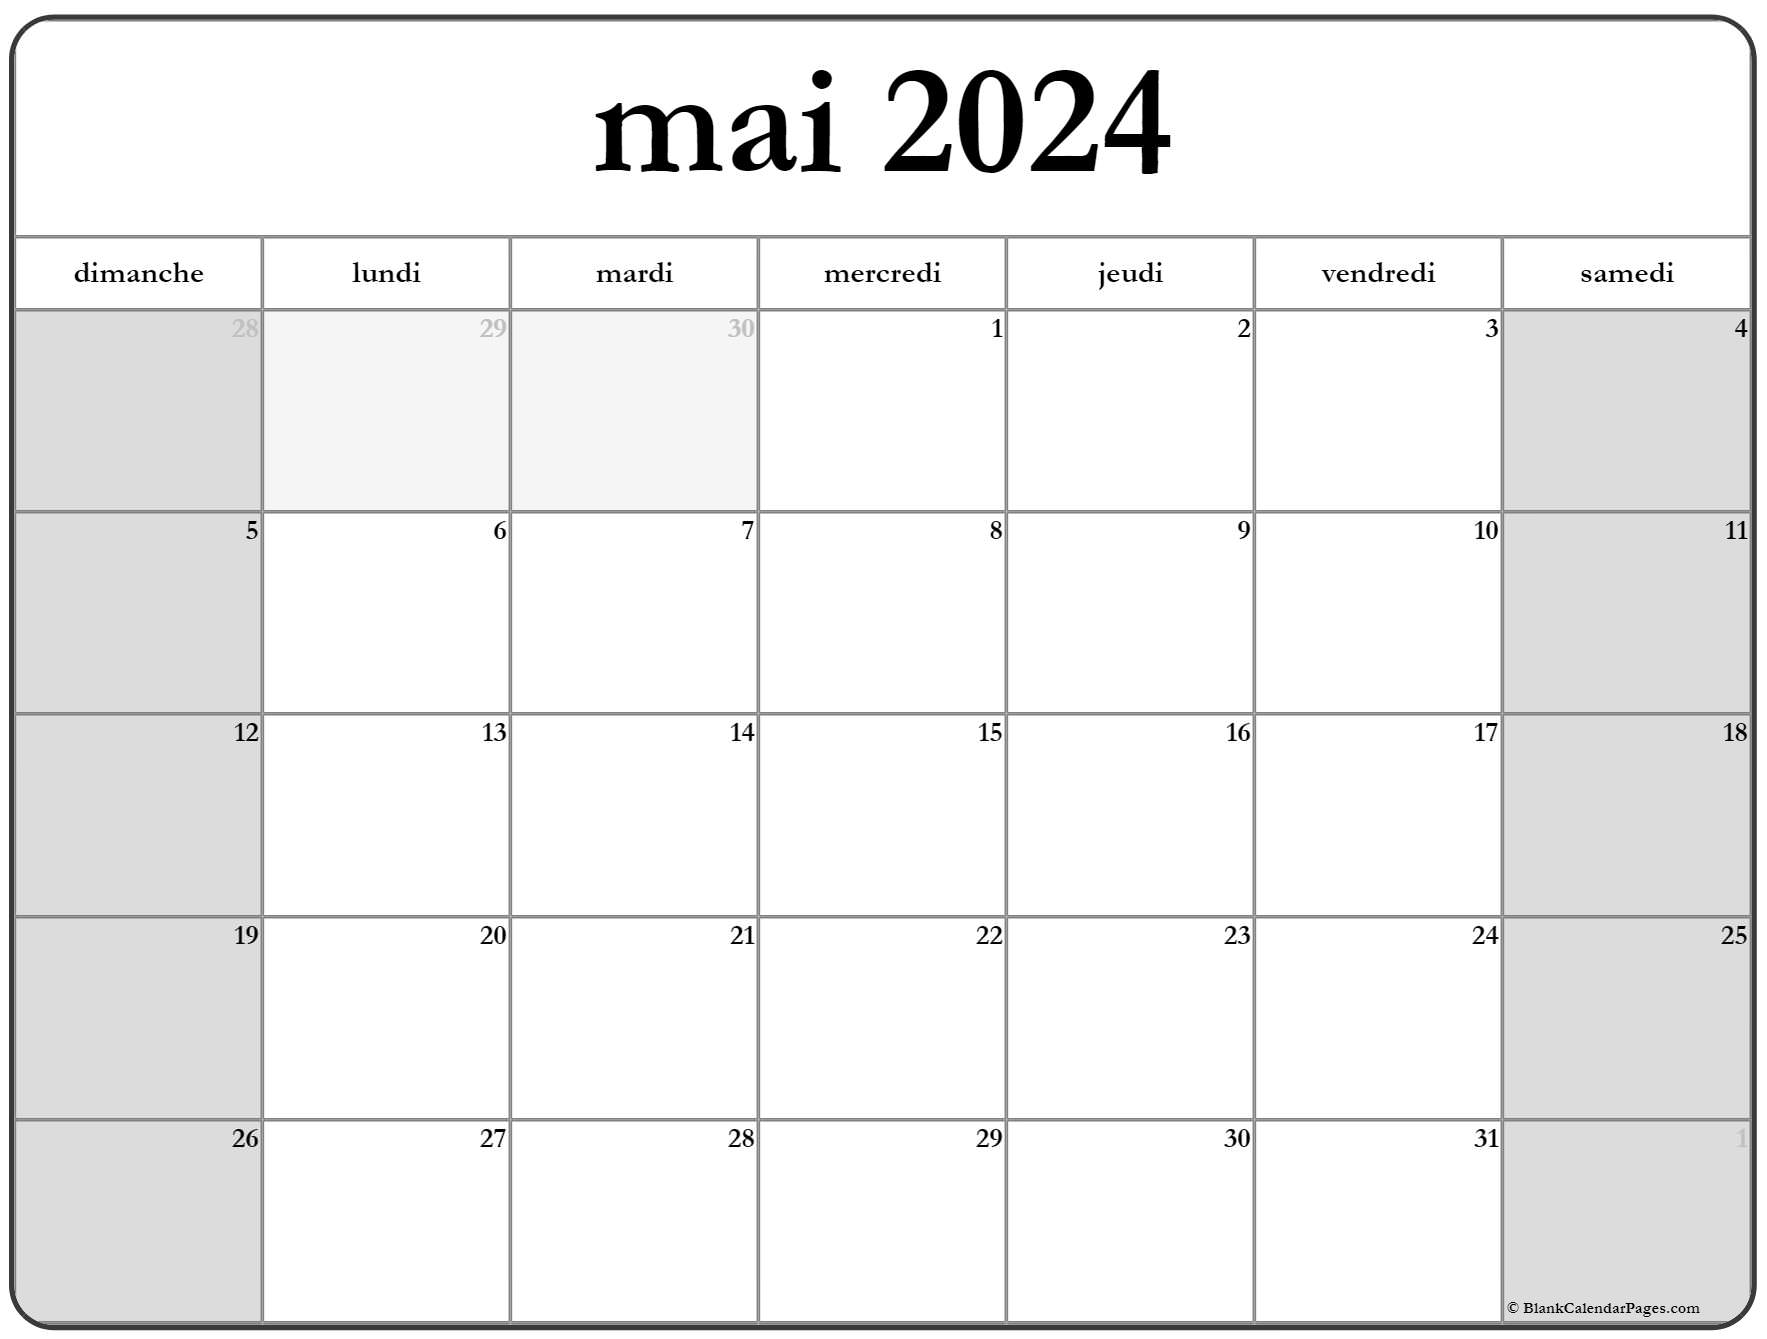 mai 2024 calendrier imprimable | Calendrier gratuit